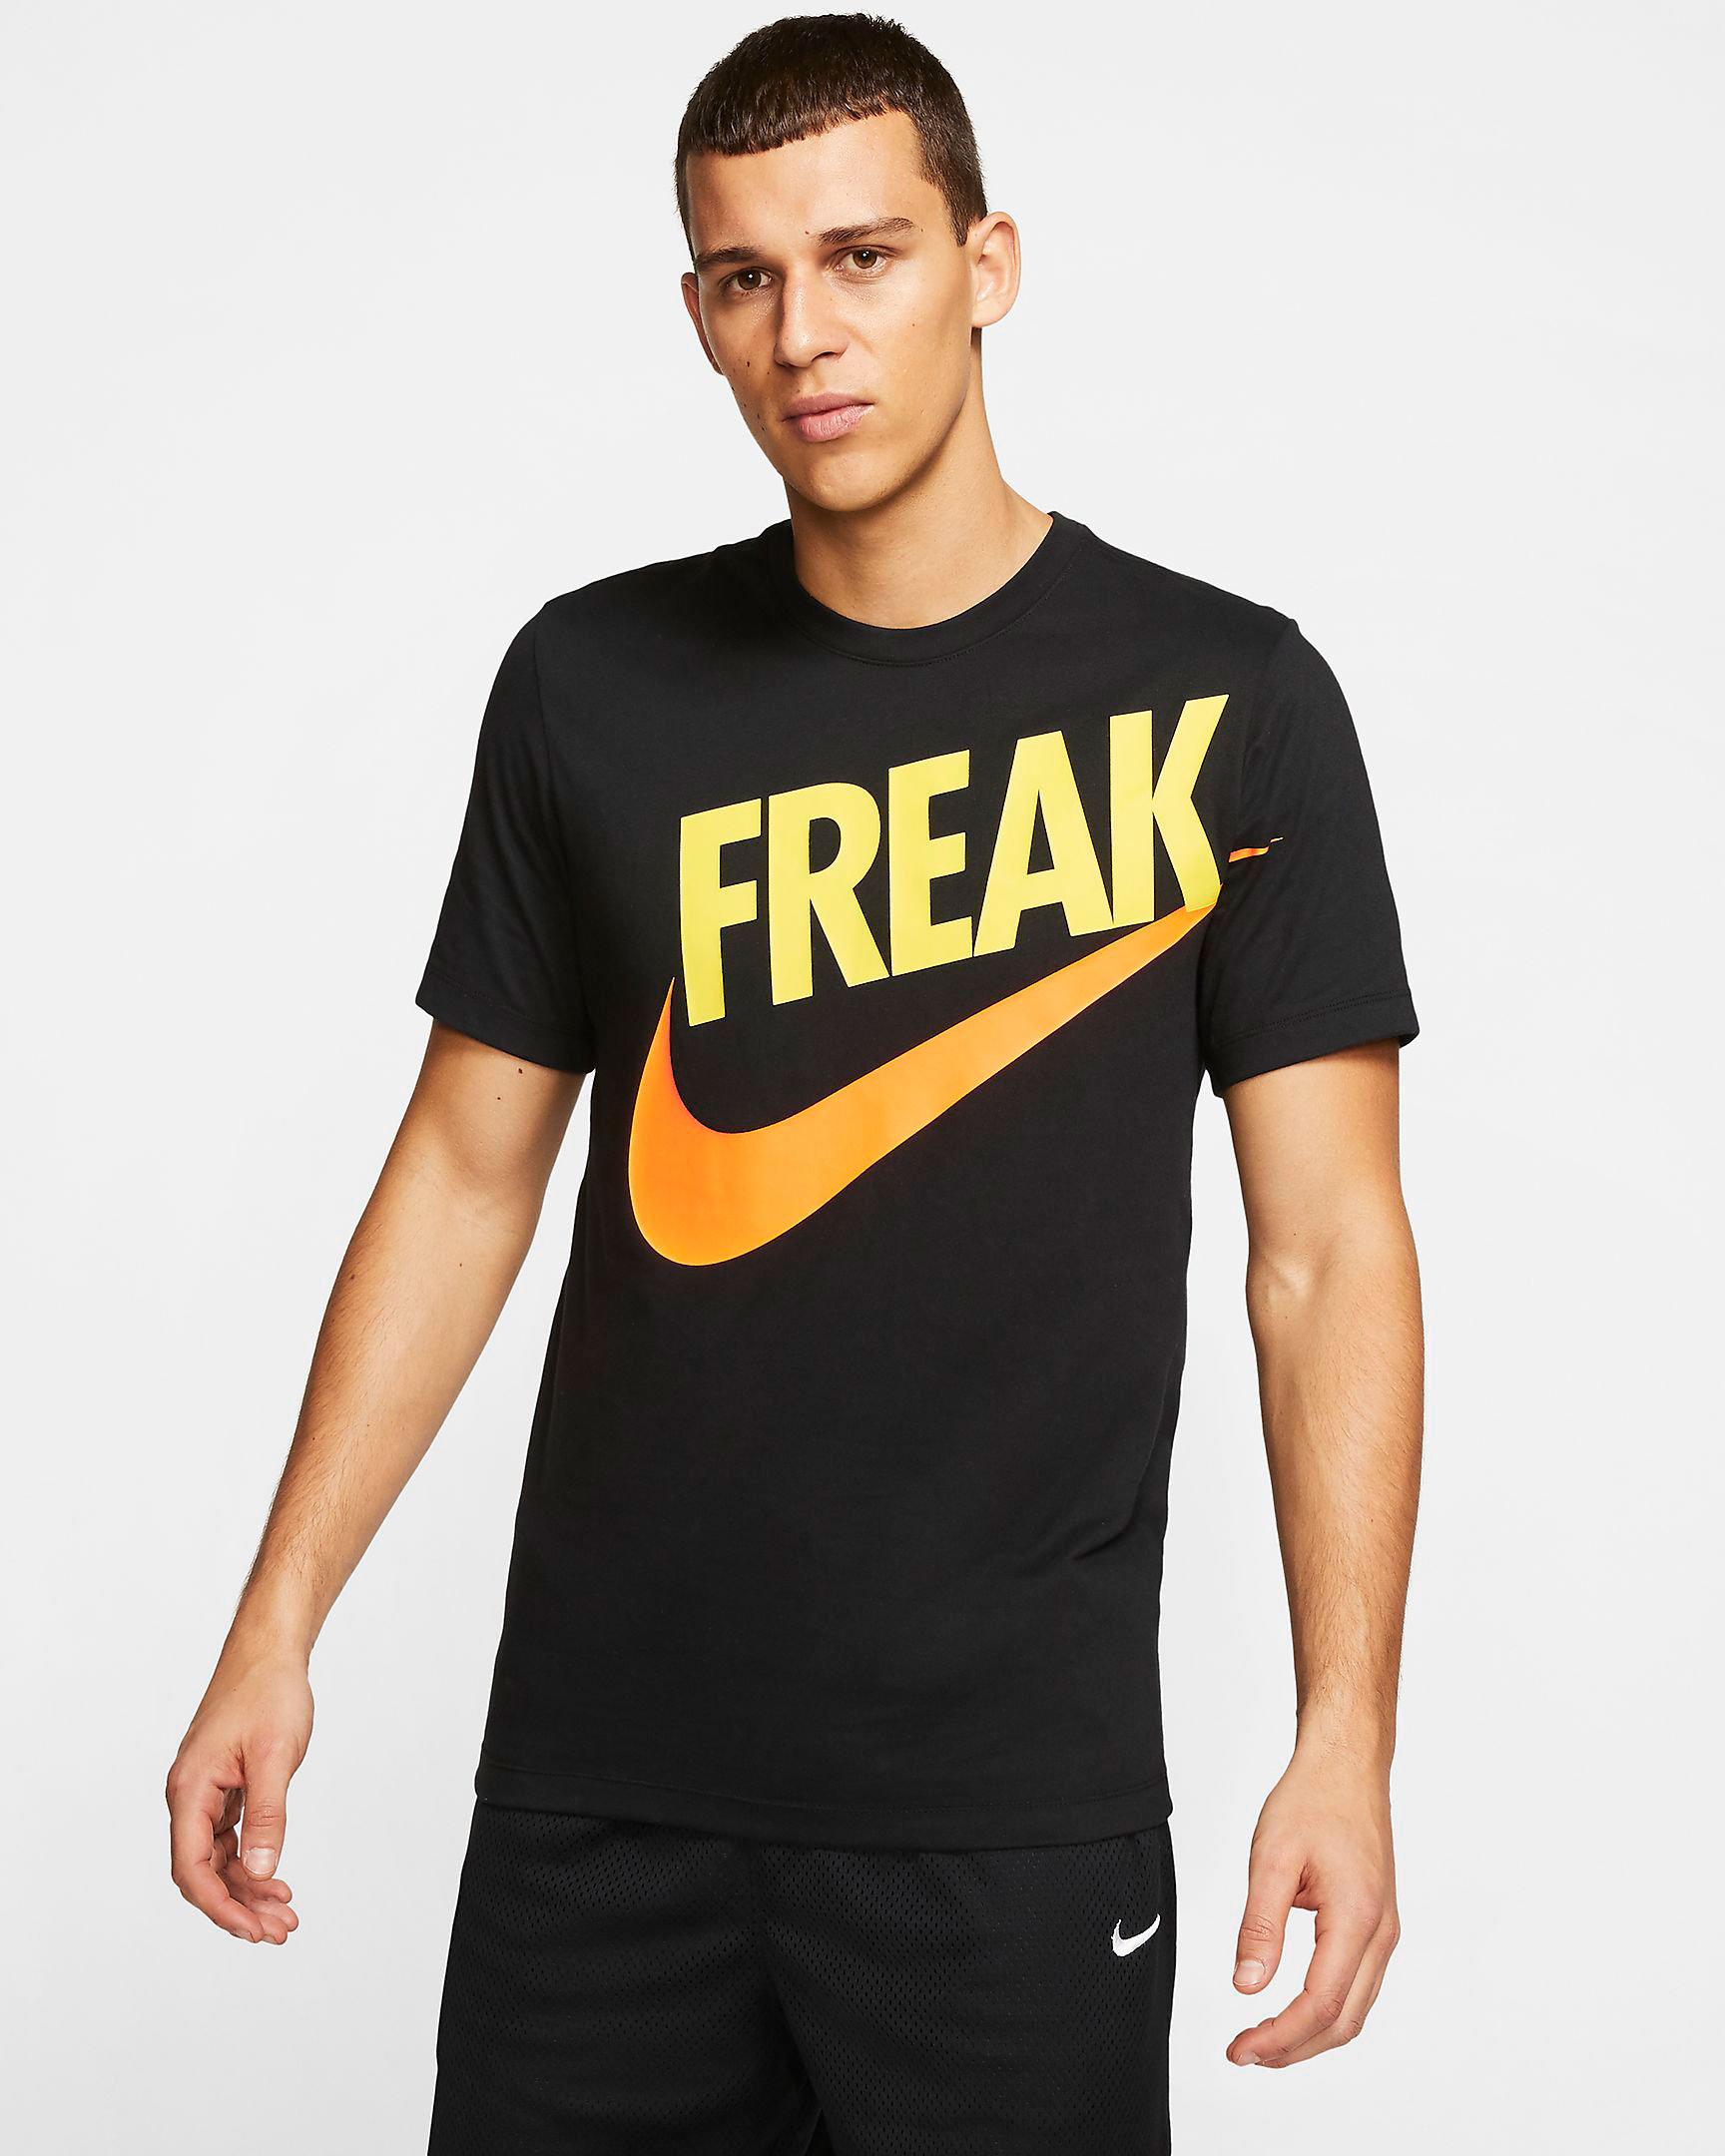 Nike Zoom Freak 1 Soul Glo Shirt and Clothing Match | SneakerFits.com